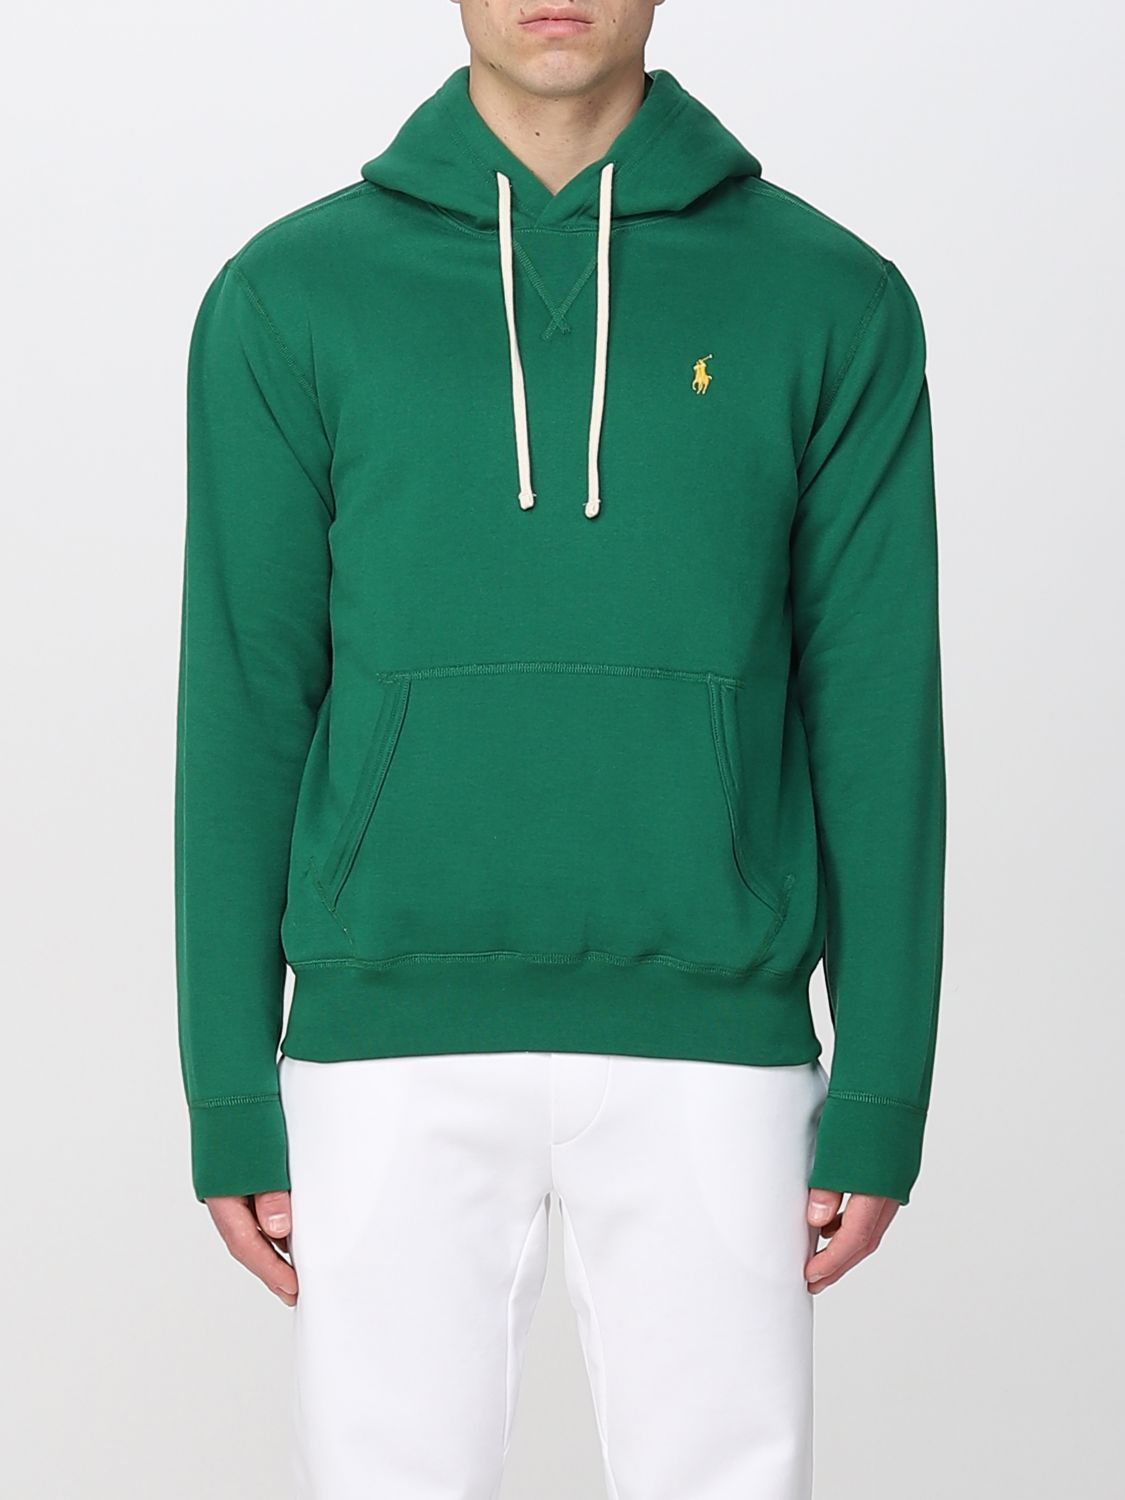 Polo Ralph Lauren Outlet: sweatshirt for man - Green | Polo Ralph Lauren  sweatshirt 710766778 online on 